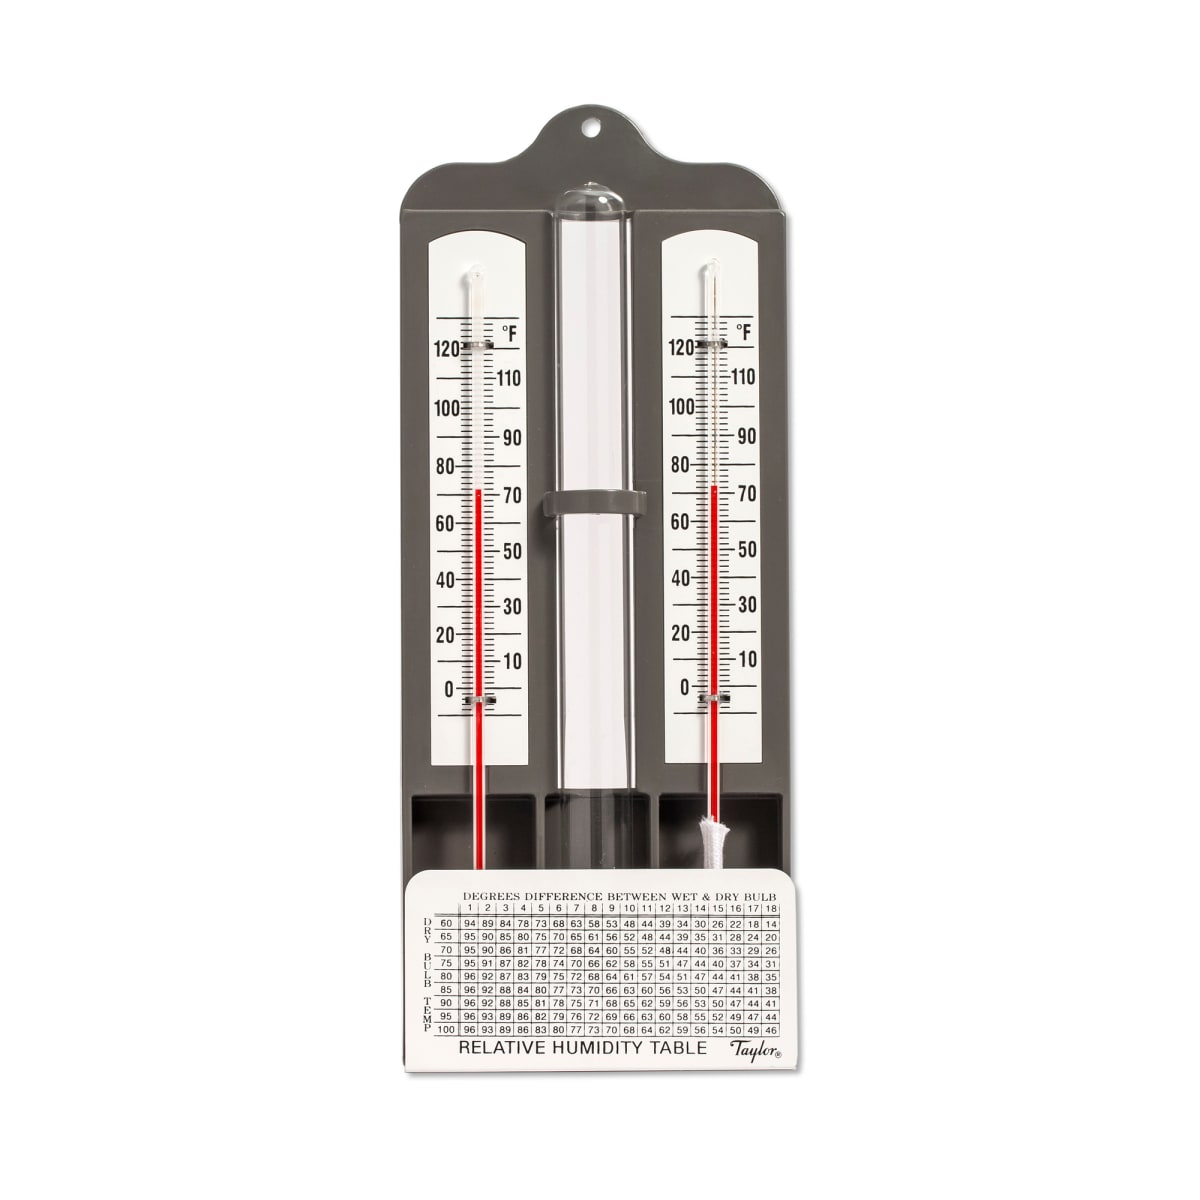 Taylor Hygrometer/Temperature/Time Digital Thermometer Plastic Black